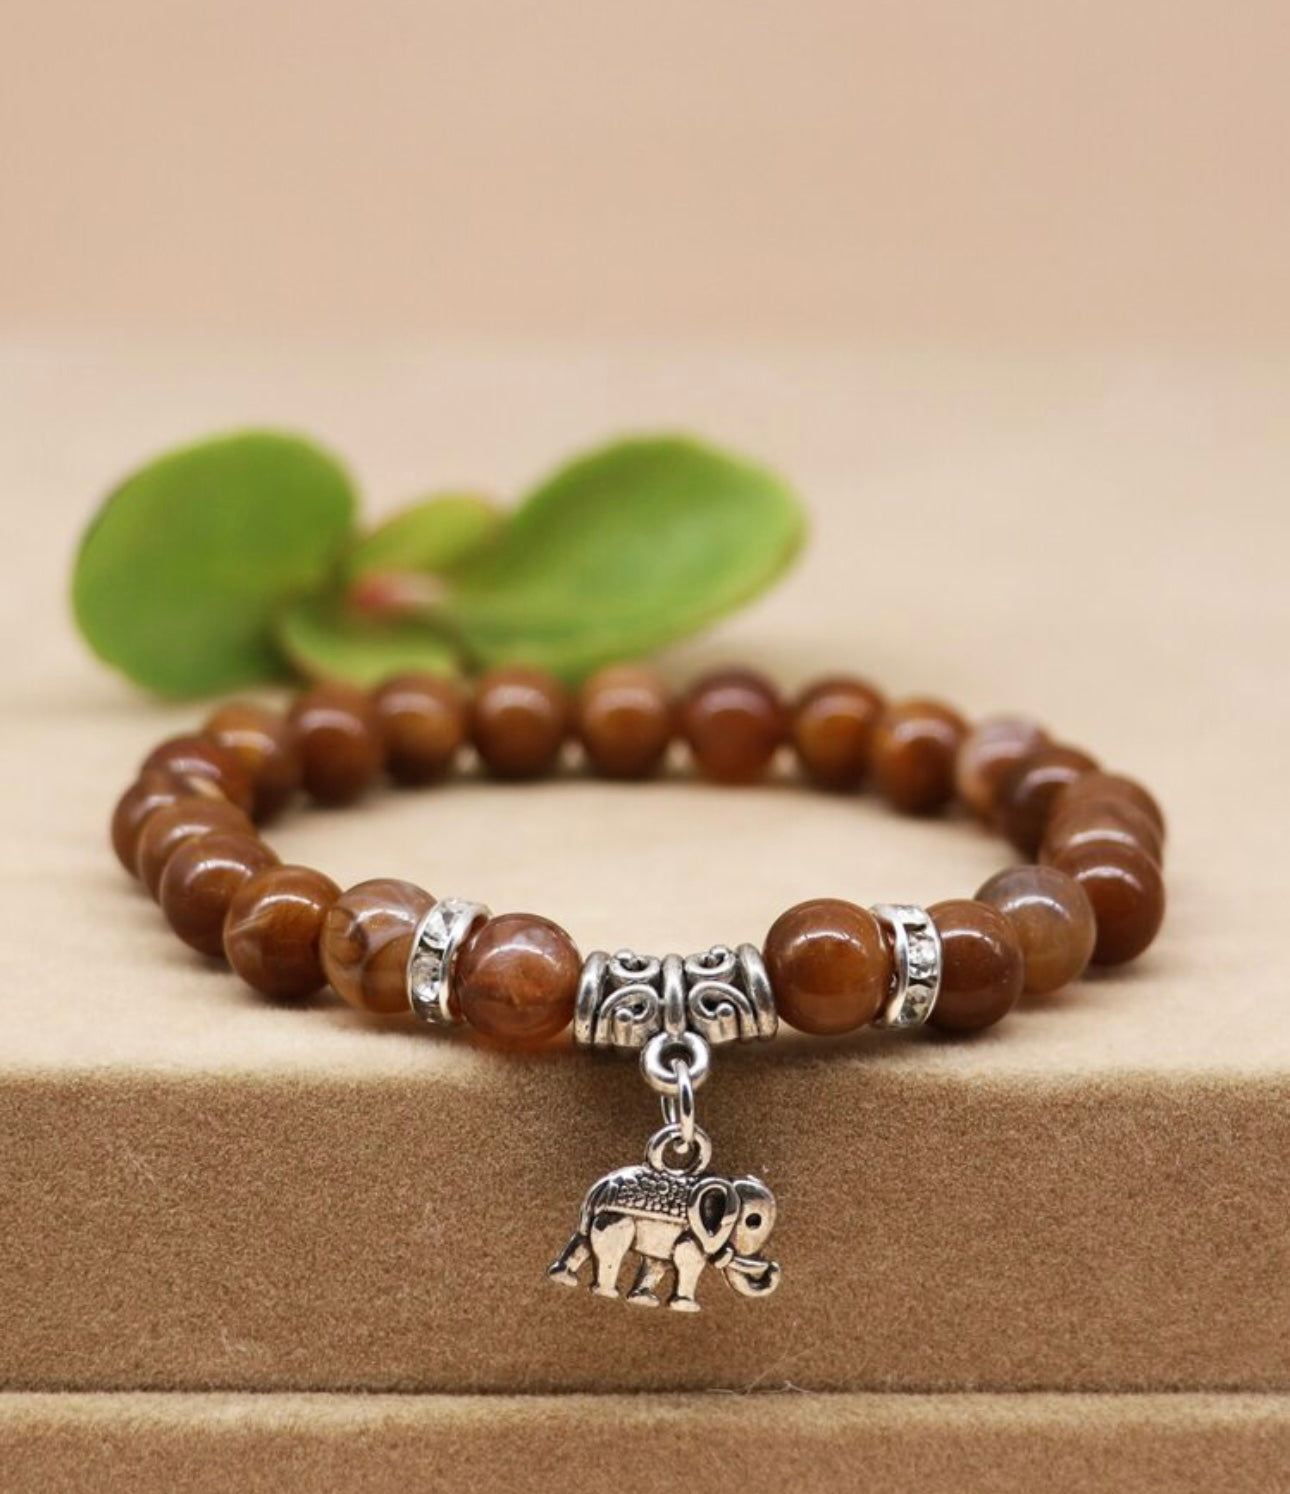 Brown elephant bracelet